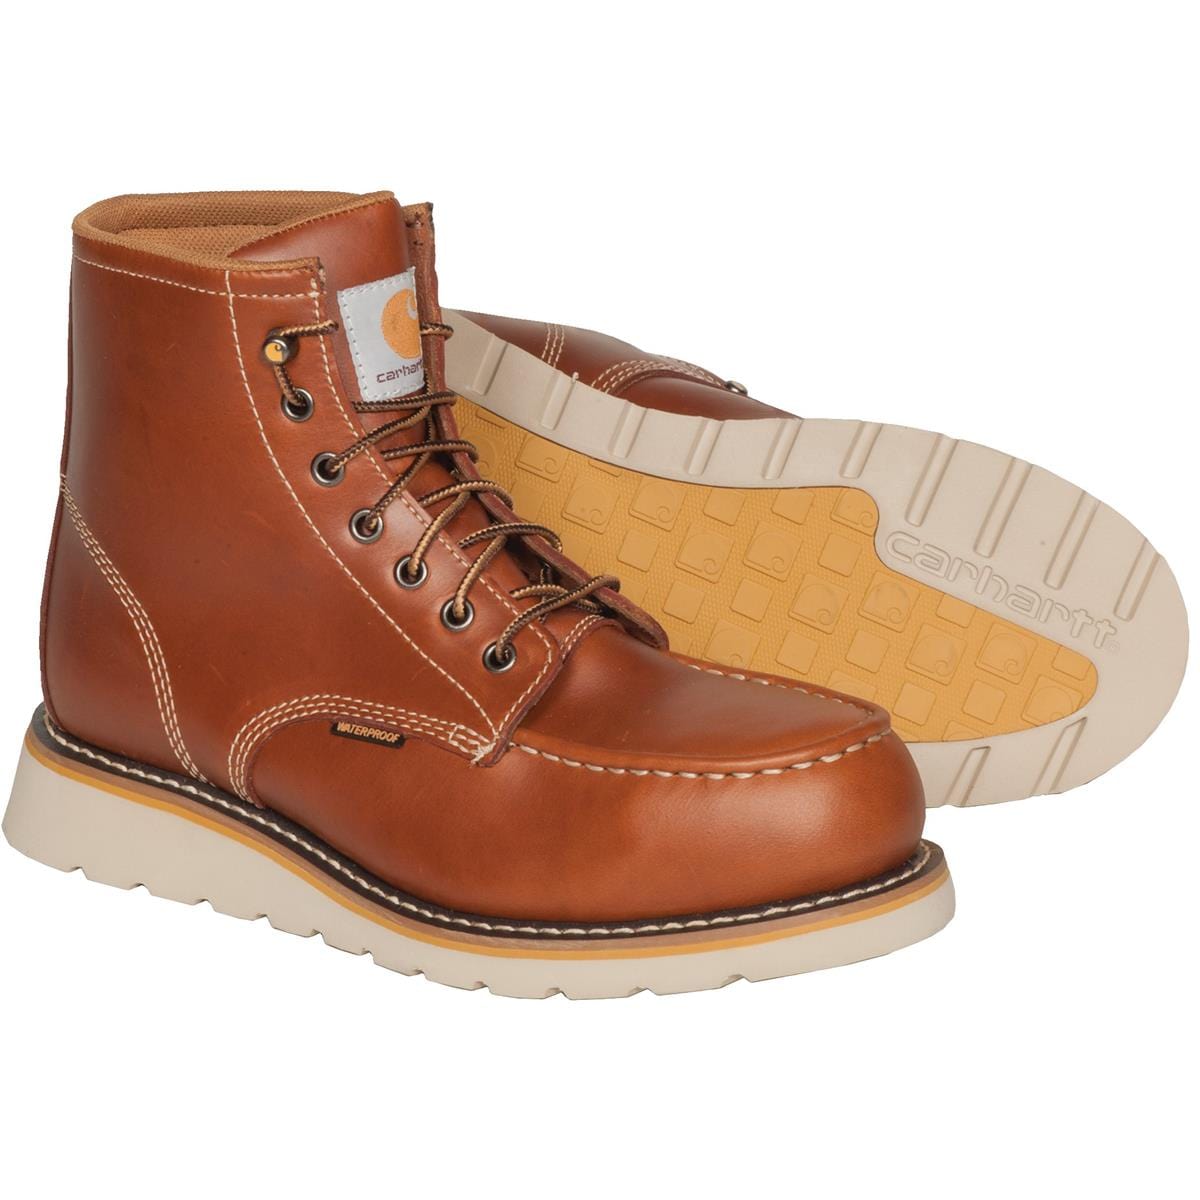 Carhartt 6"H Wedge Sole Plain Toe Work Boots